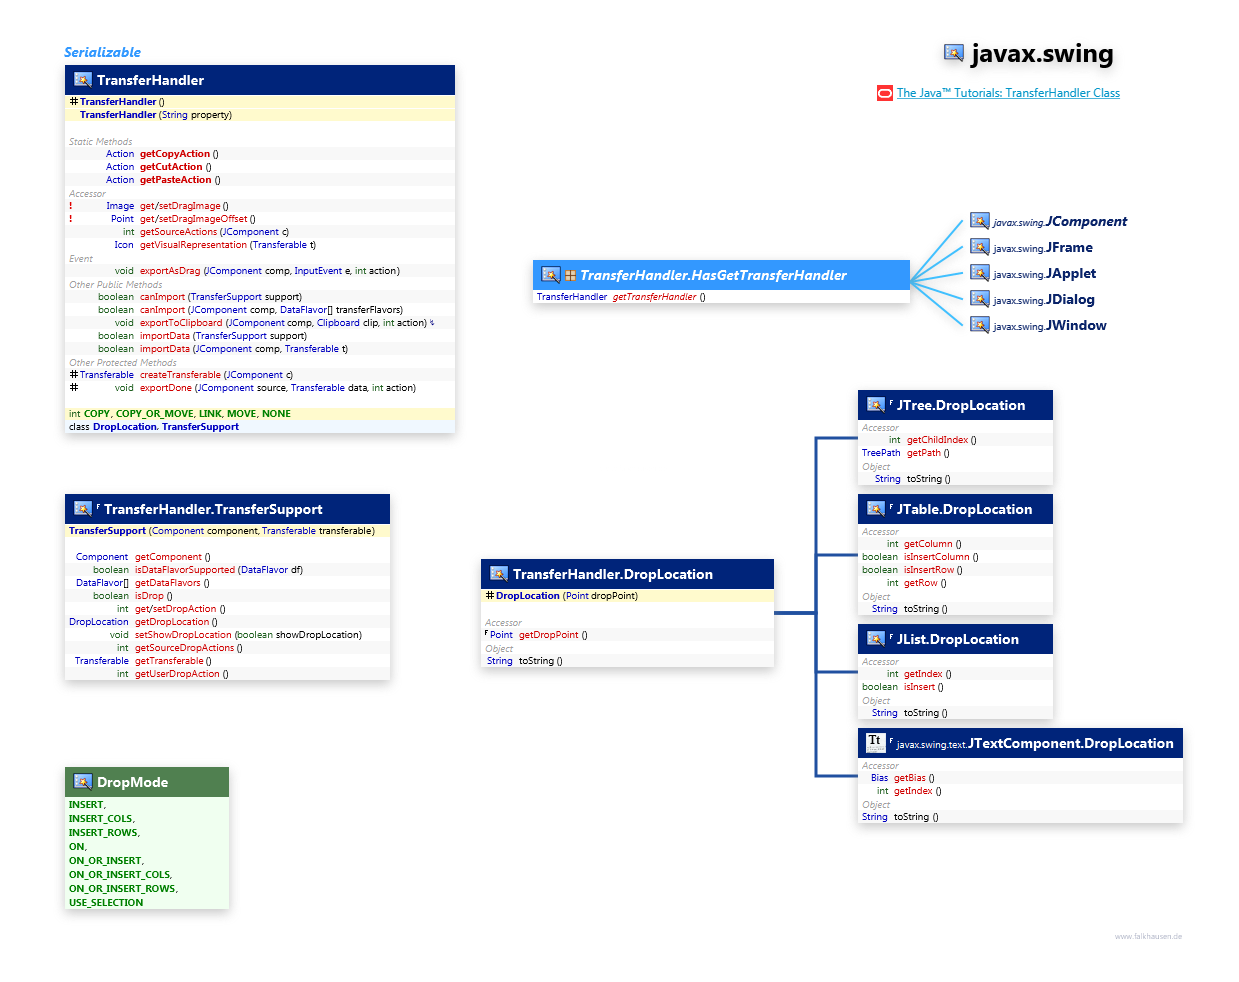 javax.swing TransferHandler class diagram and api documentation for Java 7